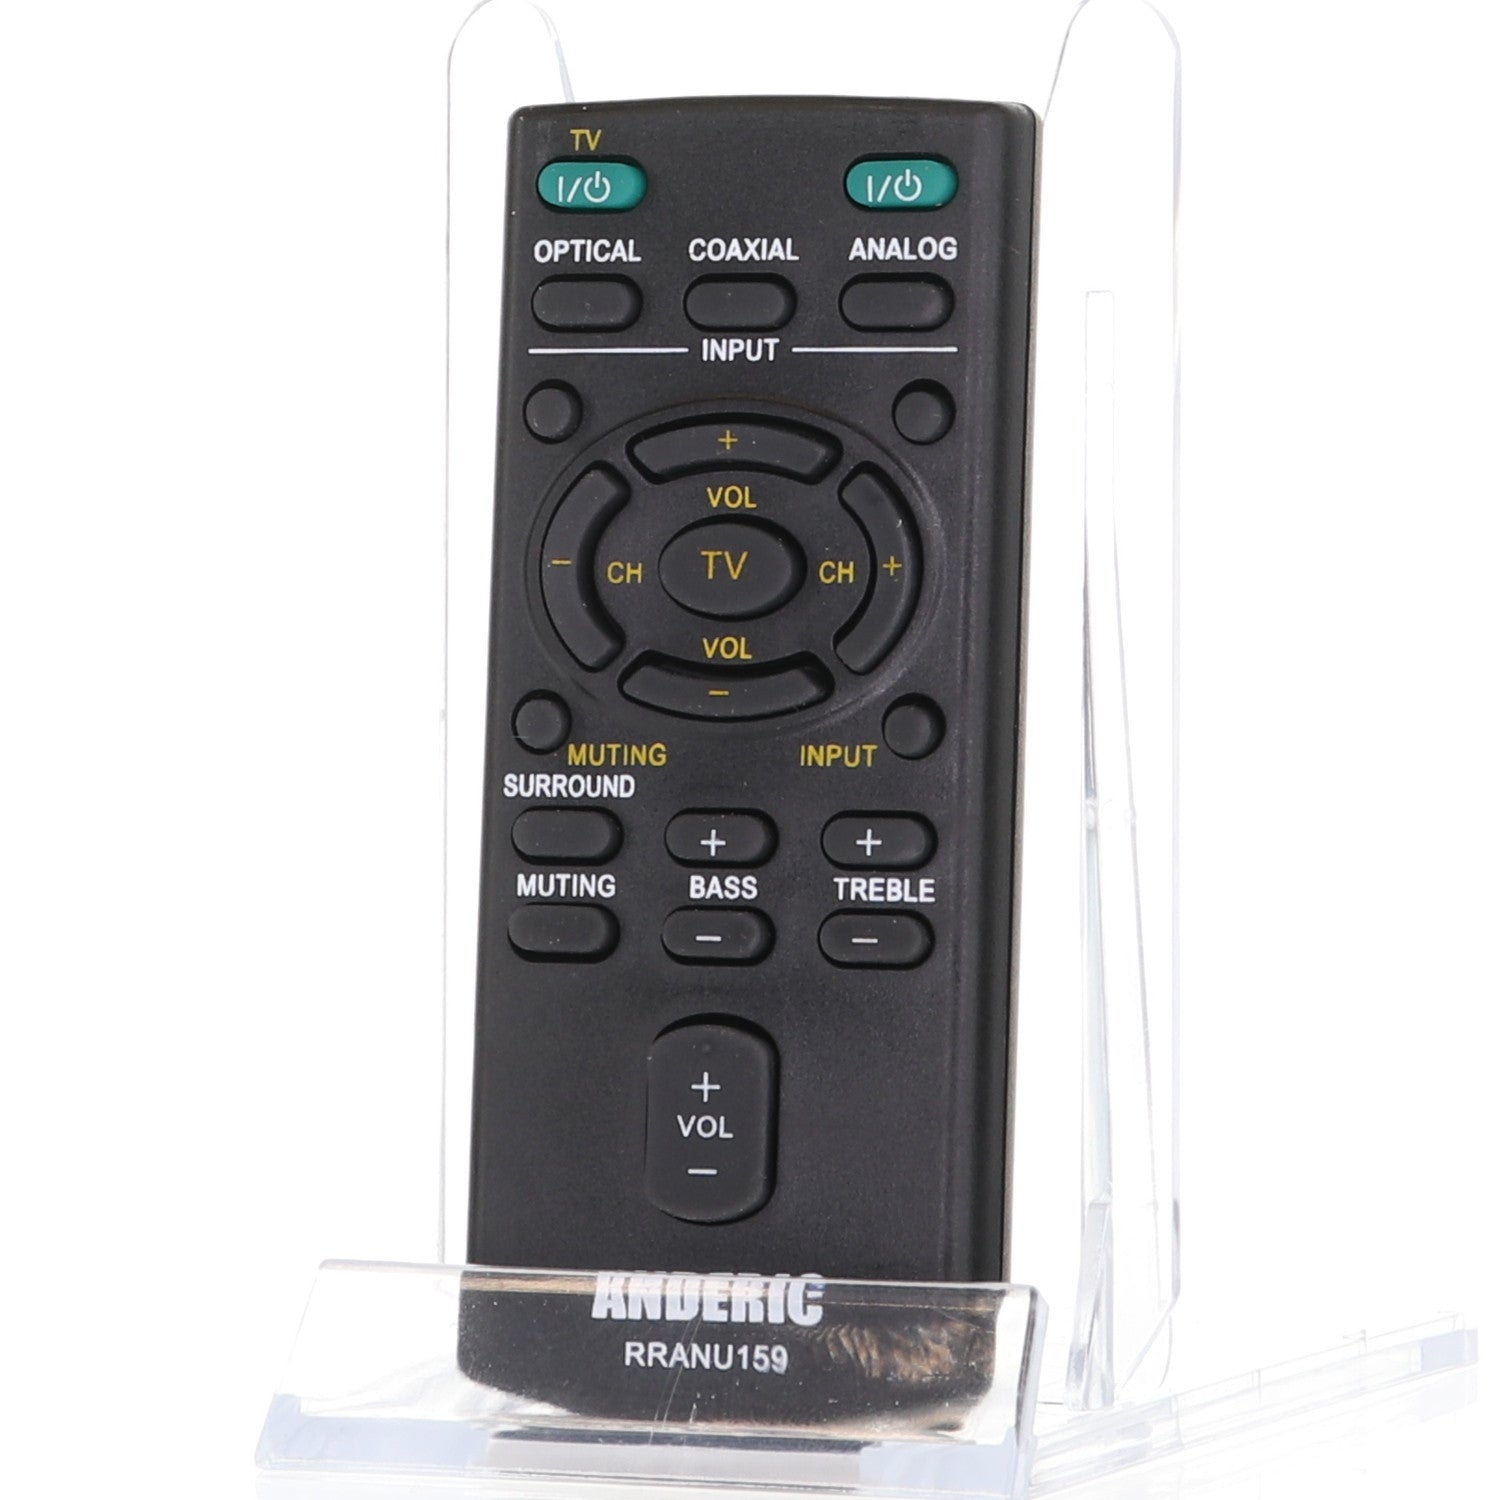 RRANU159 Remote Control for Sony® Sound Bar Systems